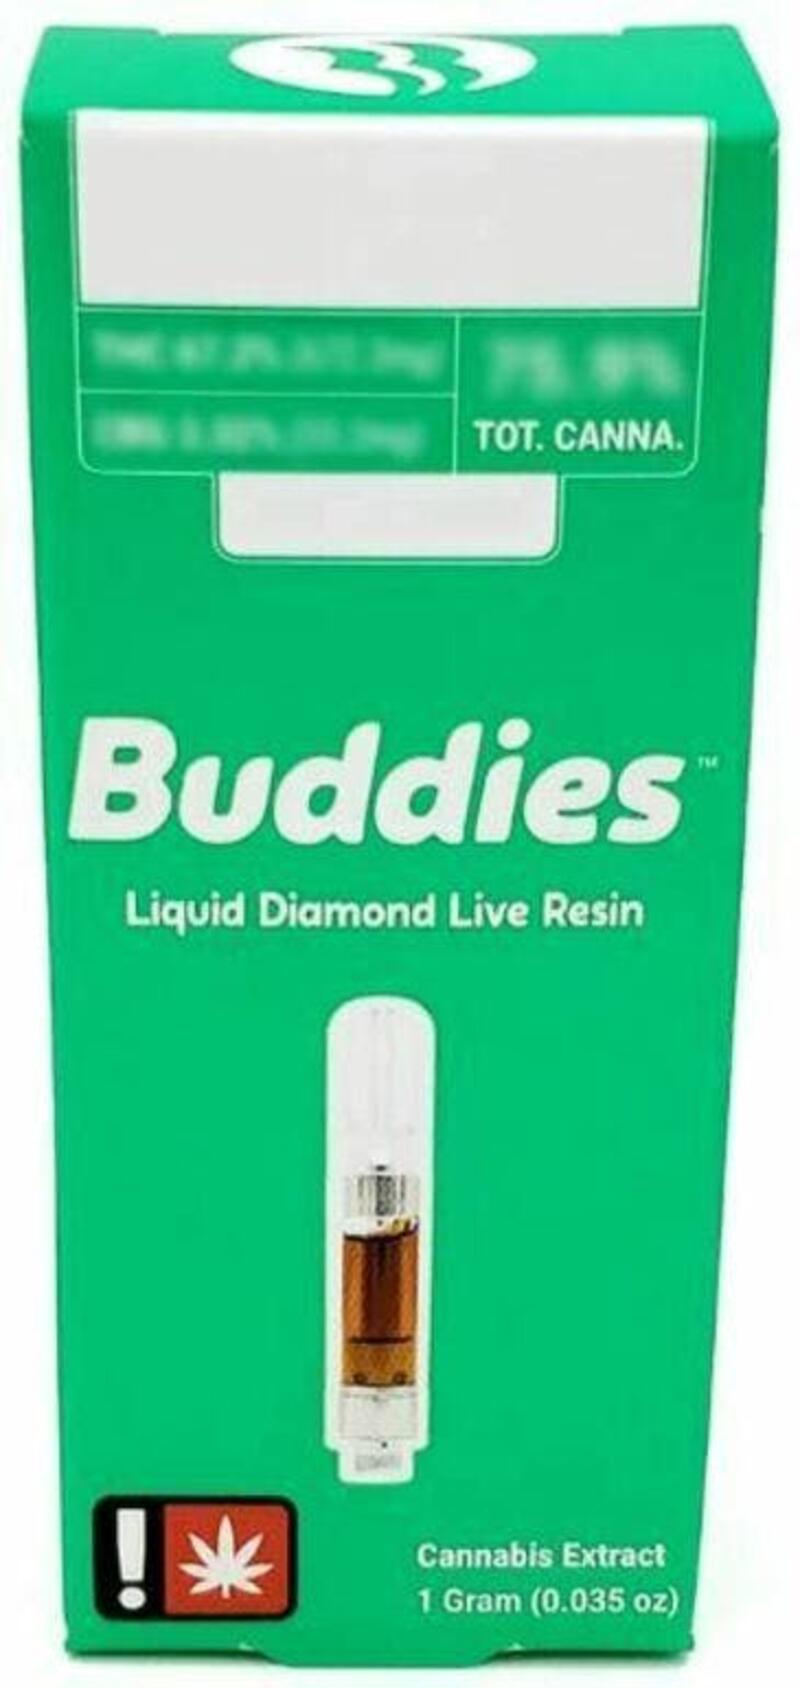 Buddies Liquid Diamonds Live Resin Cart 1g (S) Chili Verde